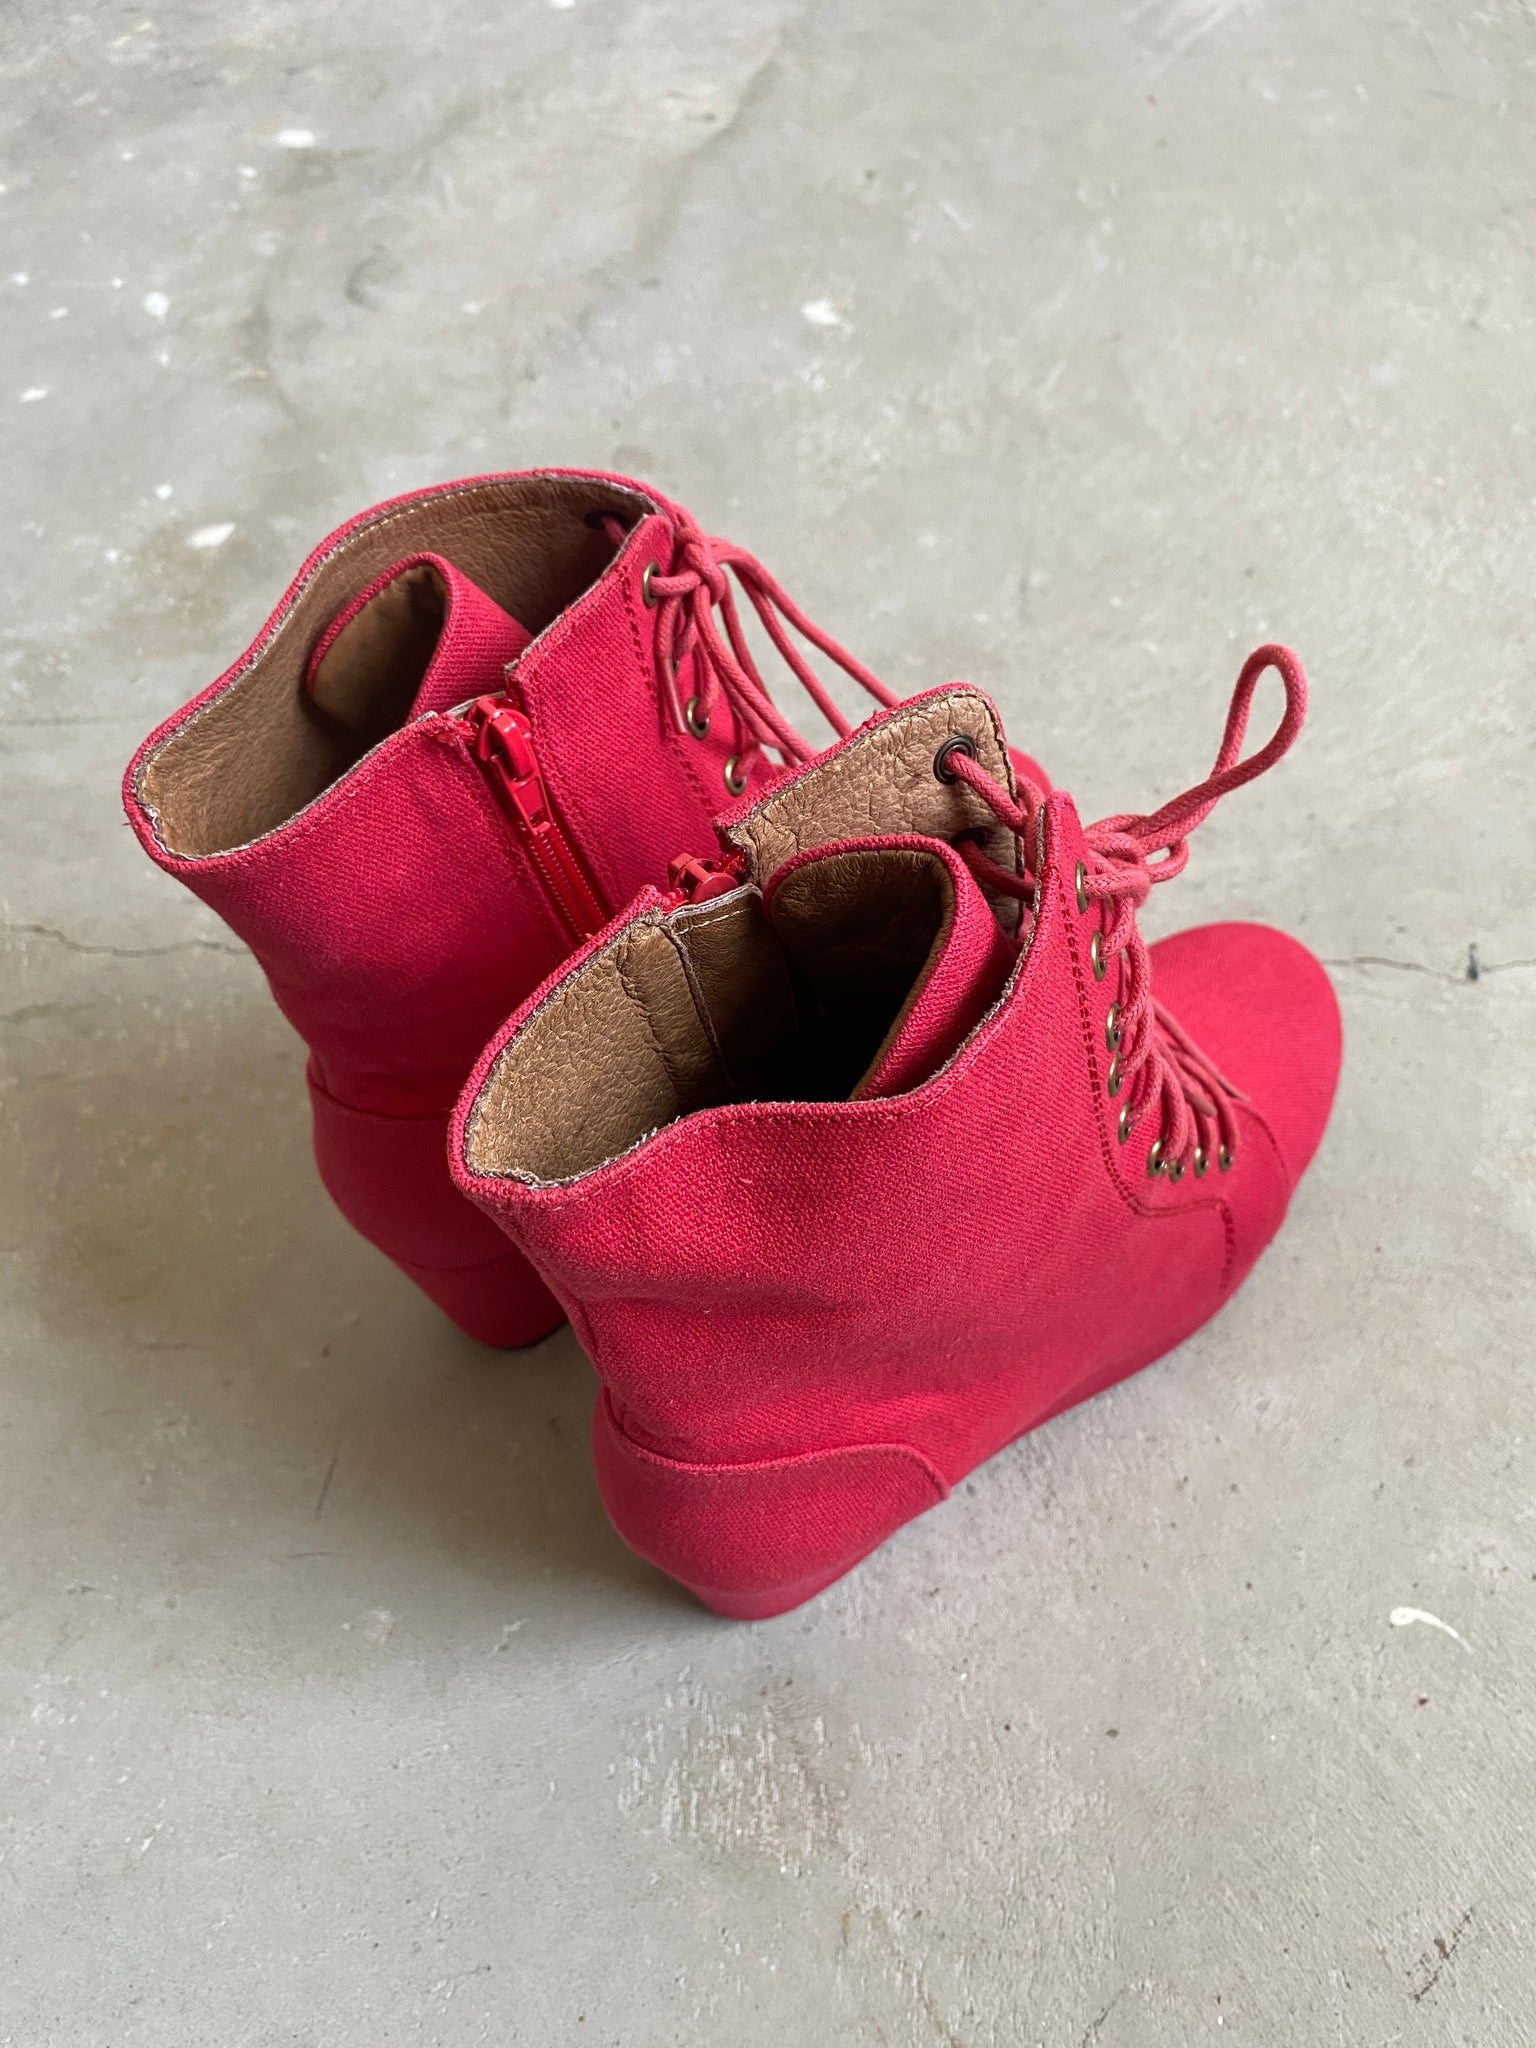 Jeffrey Campbell Red Platform Lace Up Boots (U.S. Women 9.5)